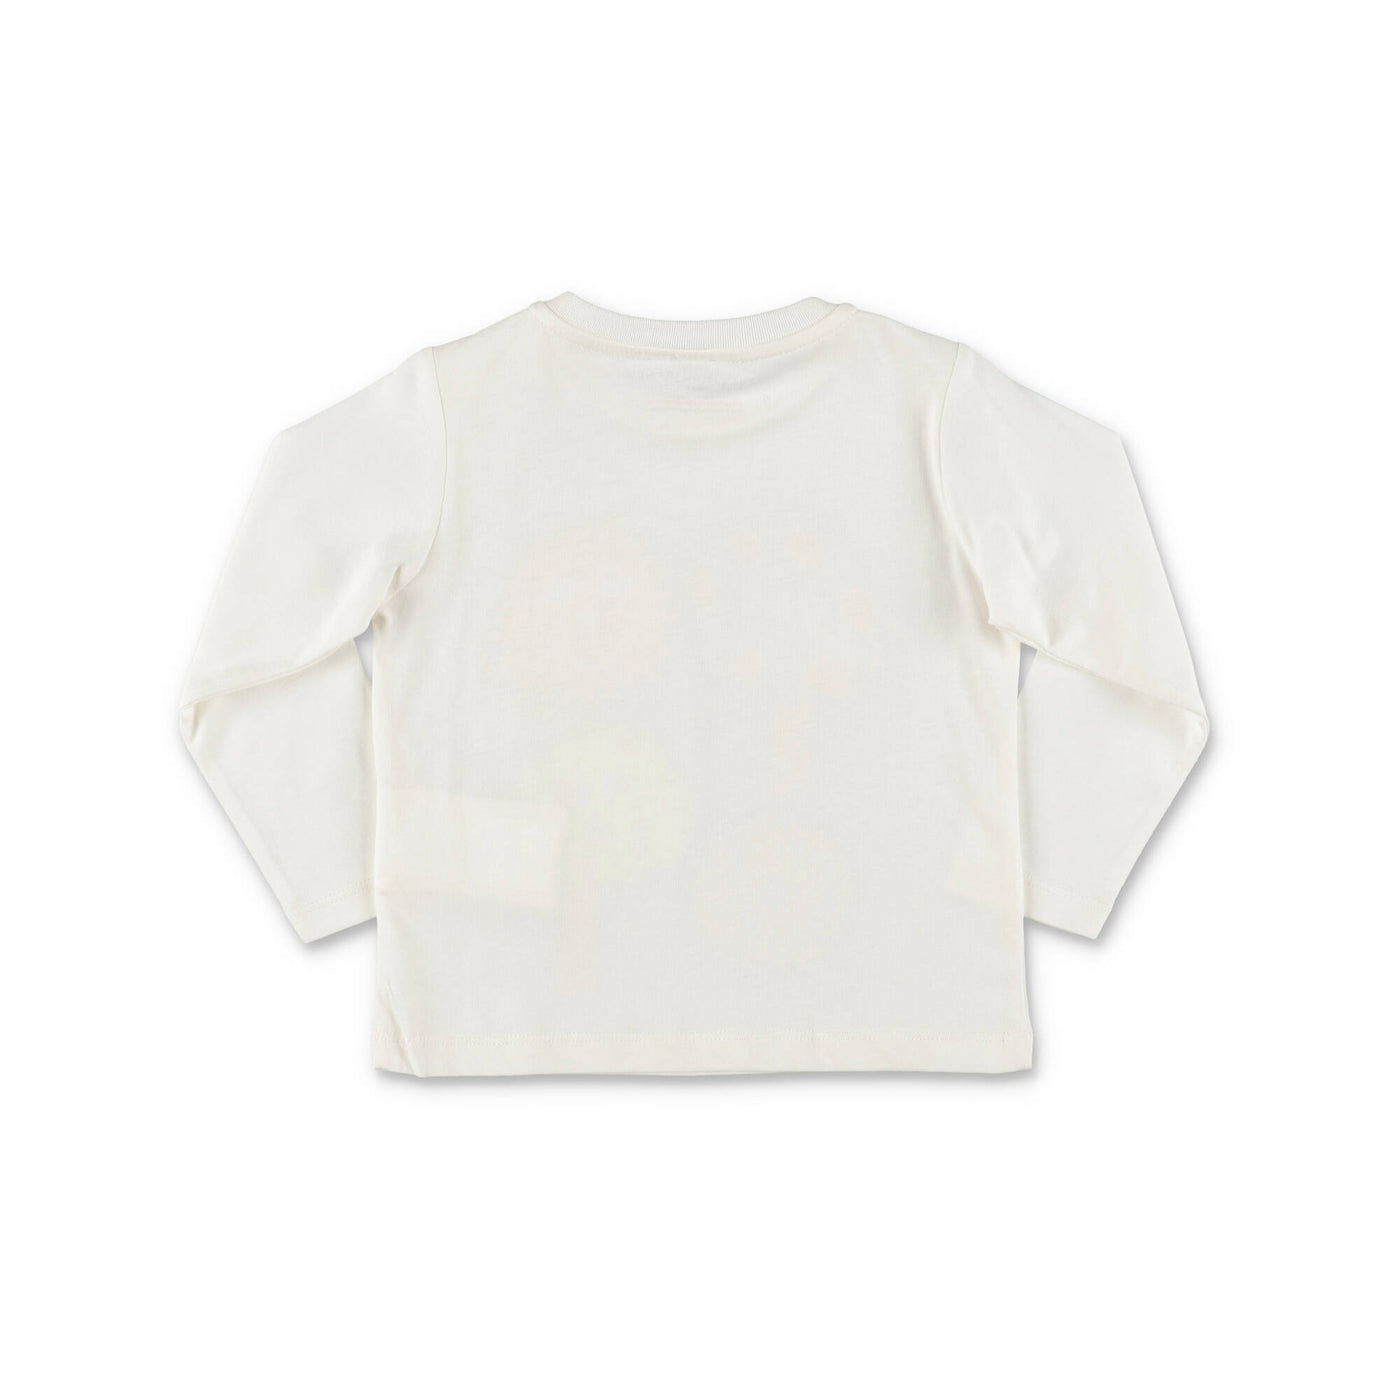 White cotton jersey baby boy STELLA McCARTNEY t-shirt